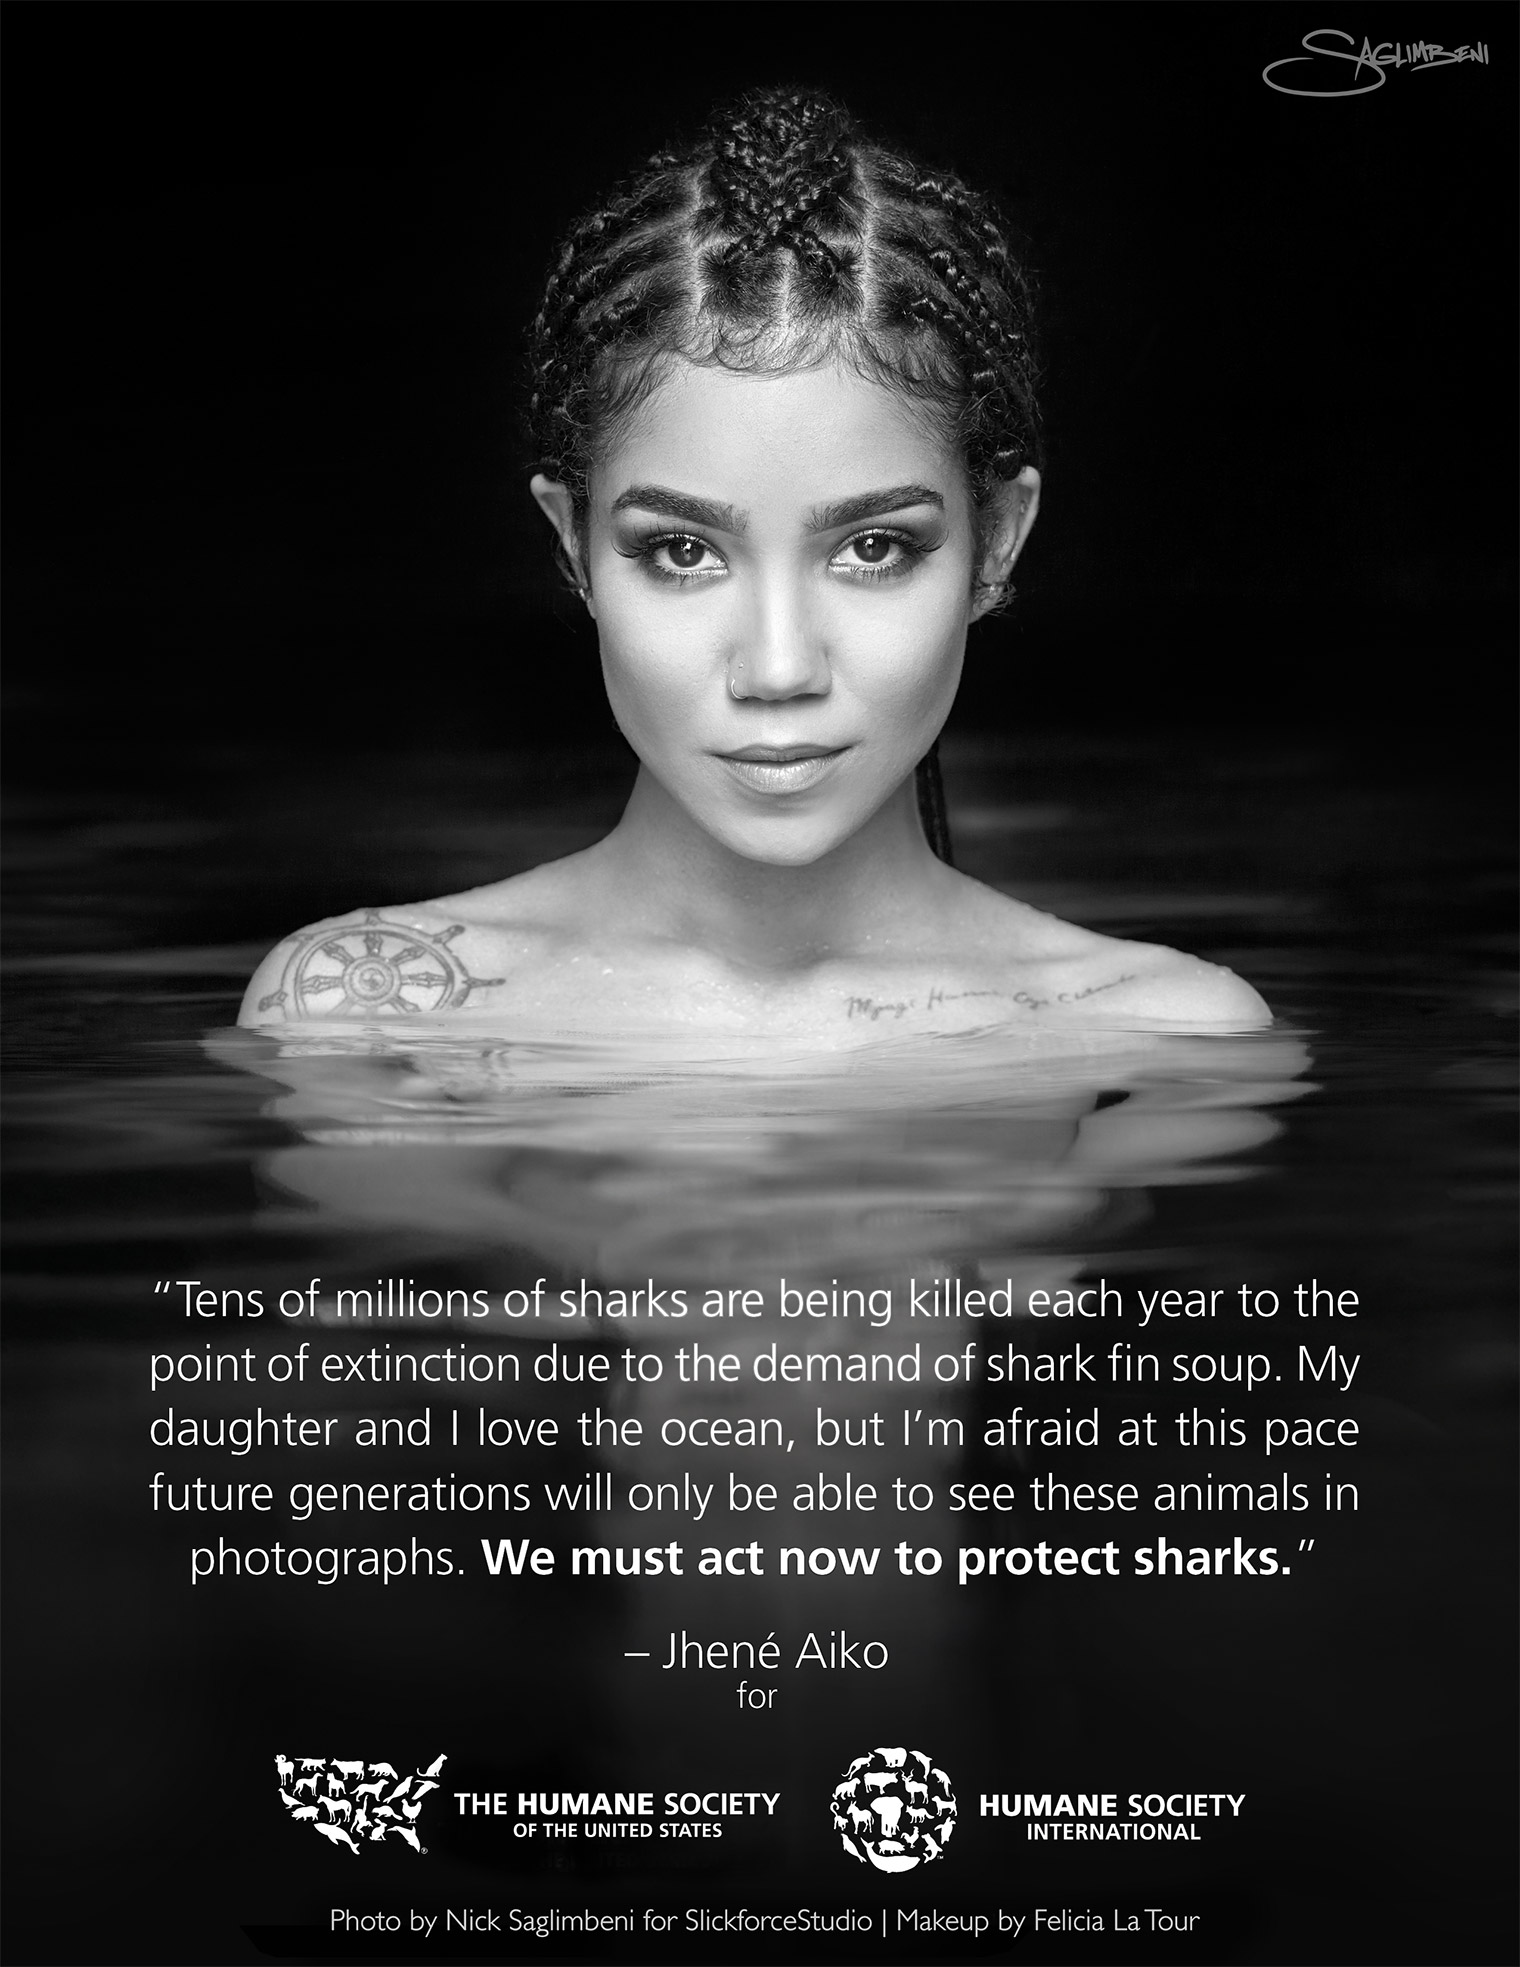 Jhene-Aiko-Protect-Sharks-Humane-Society-International-United-States-Campaign-Photo-Nick-Saglimbeni-Slickforce-Studio